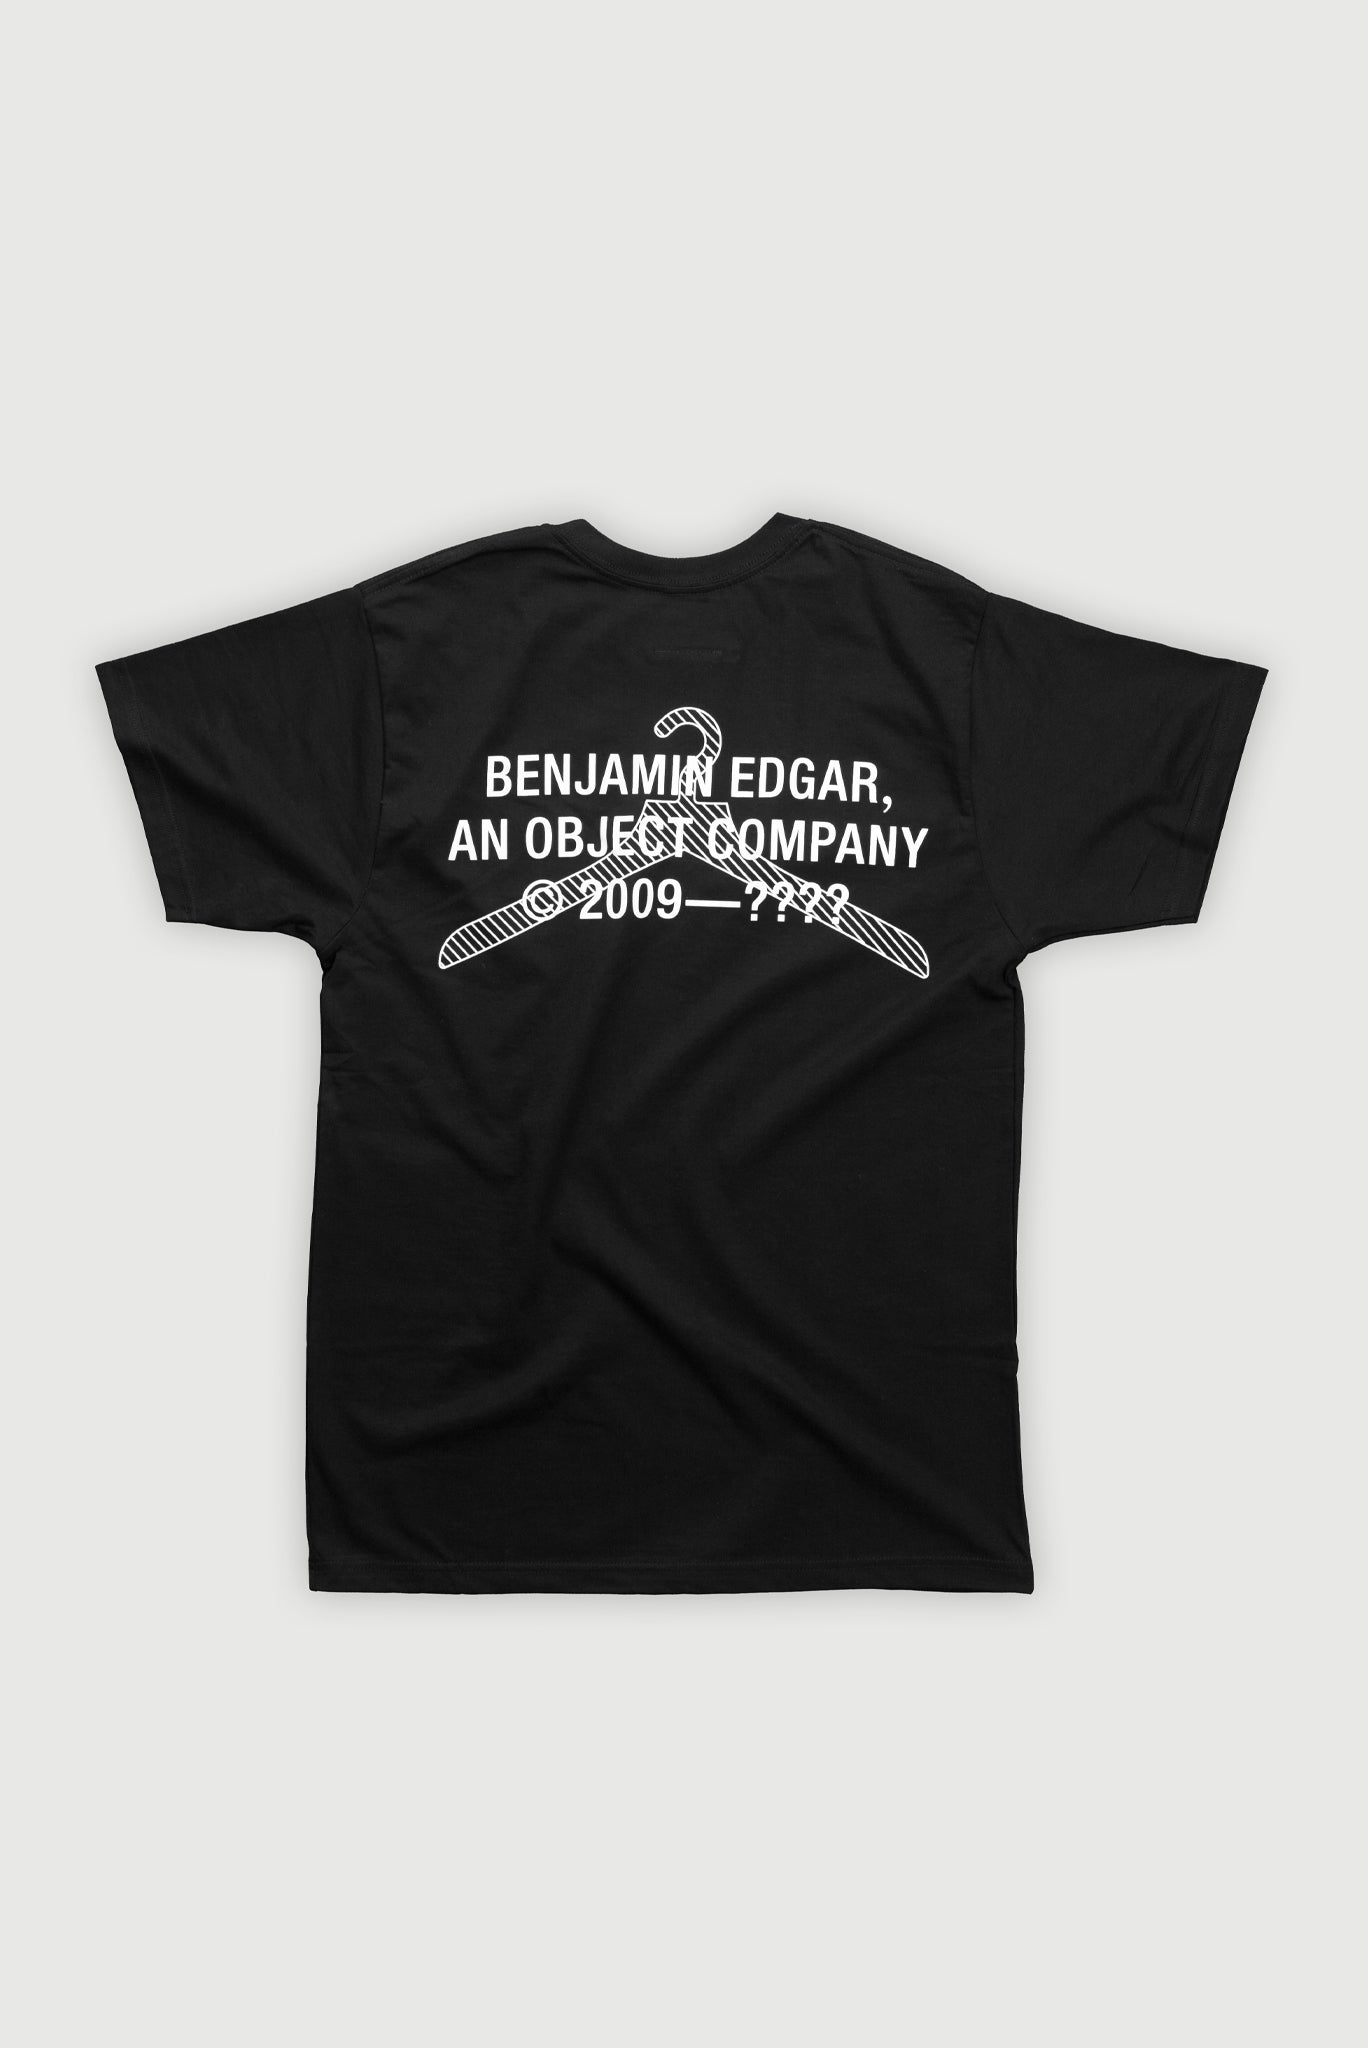 BENJAMIN Logo Hanger Simple EDGAR, object – T-Shirt